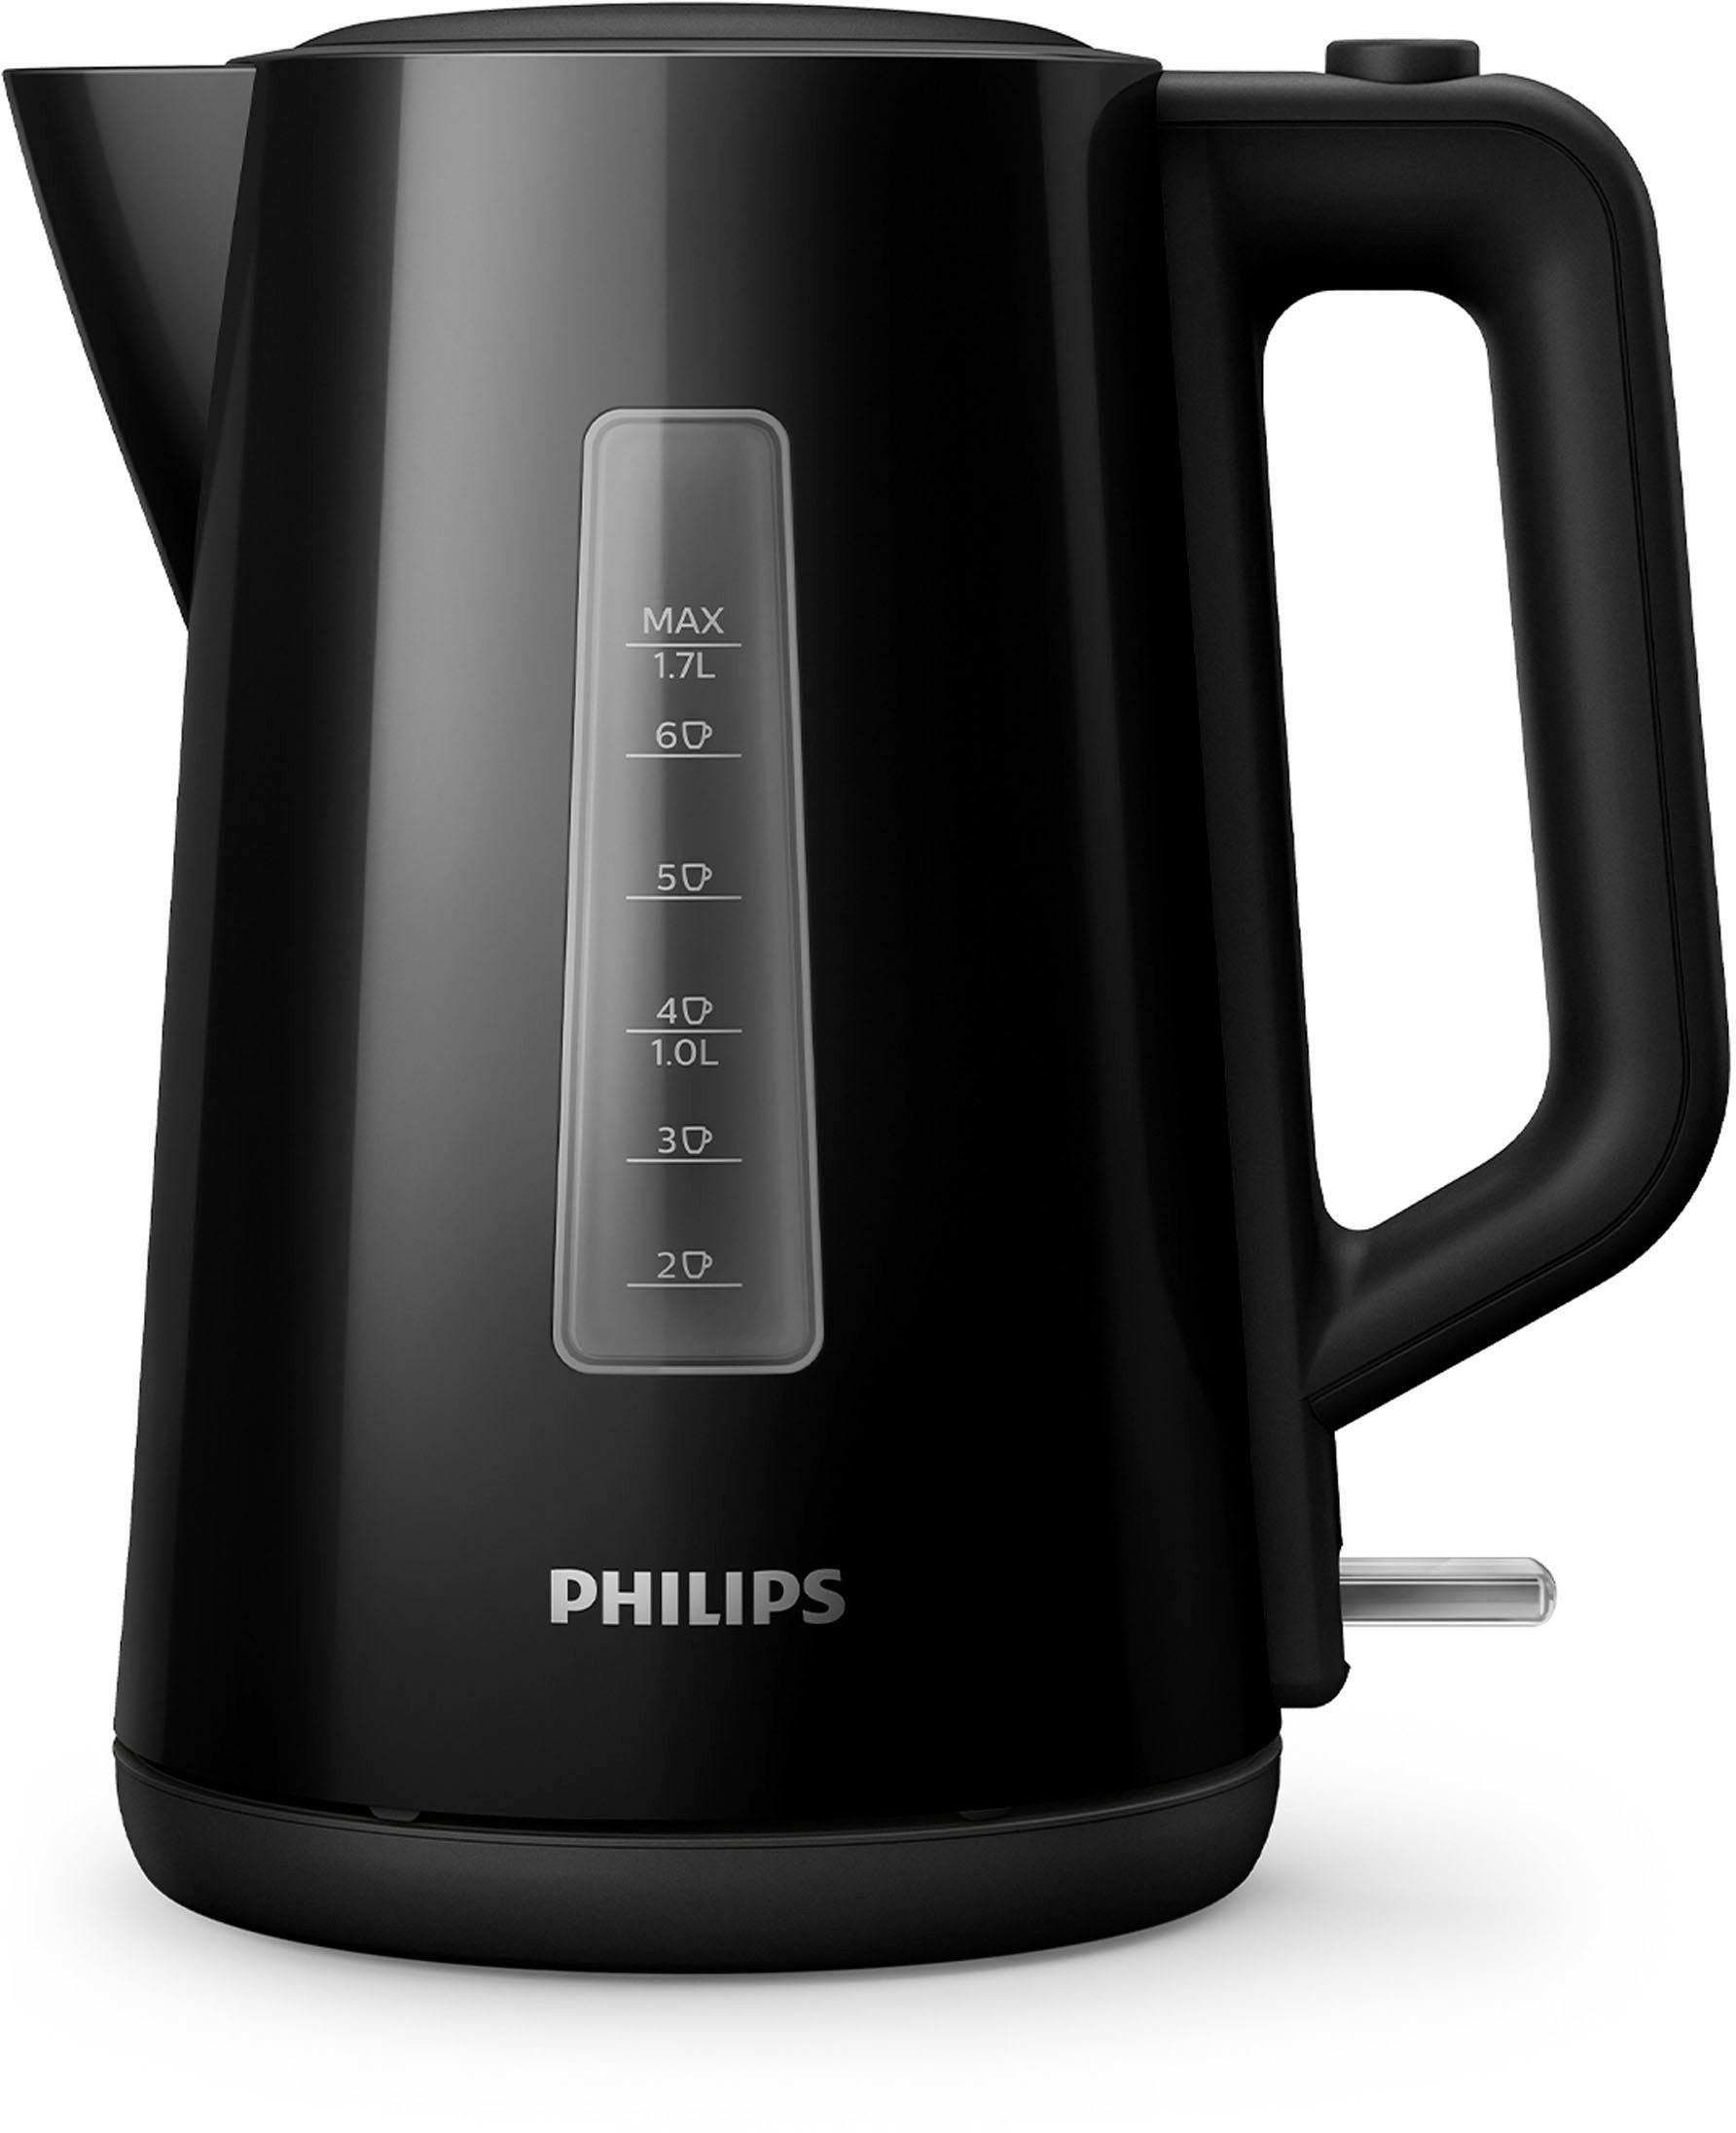 Philips Wasserkocher Series 3000 HD9318/20, 1,7 l, 2200 W, schwarz | Wasserkocher